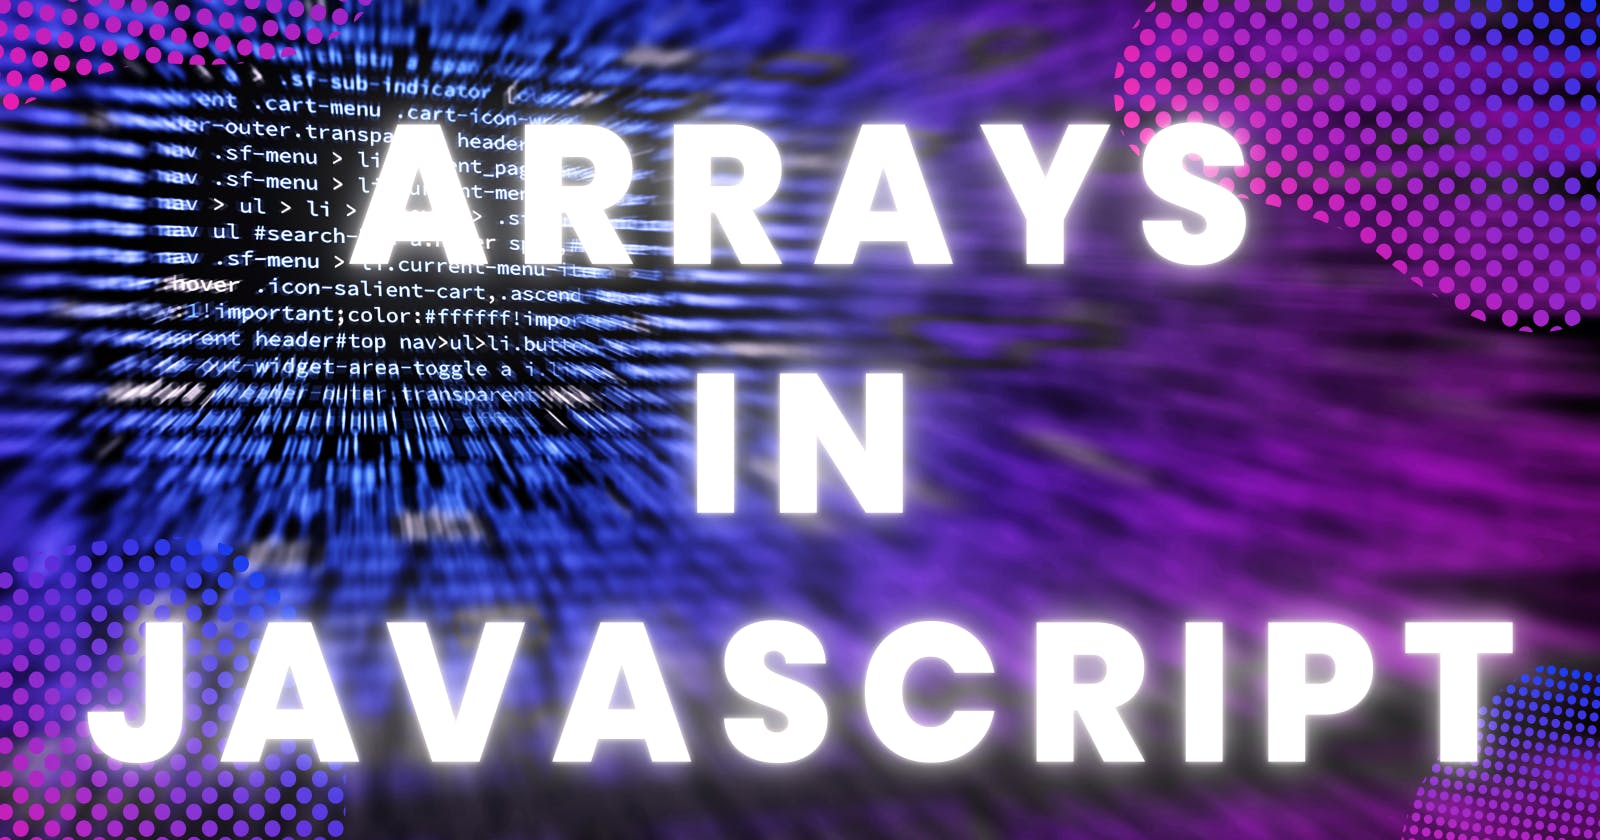 Arrays in Javascript